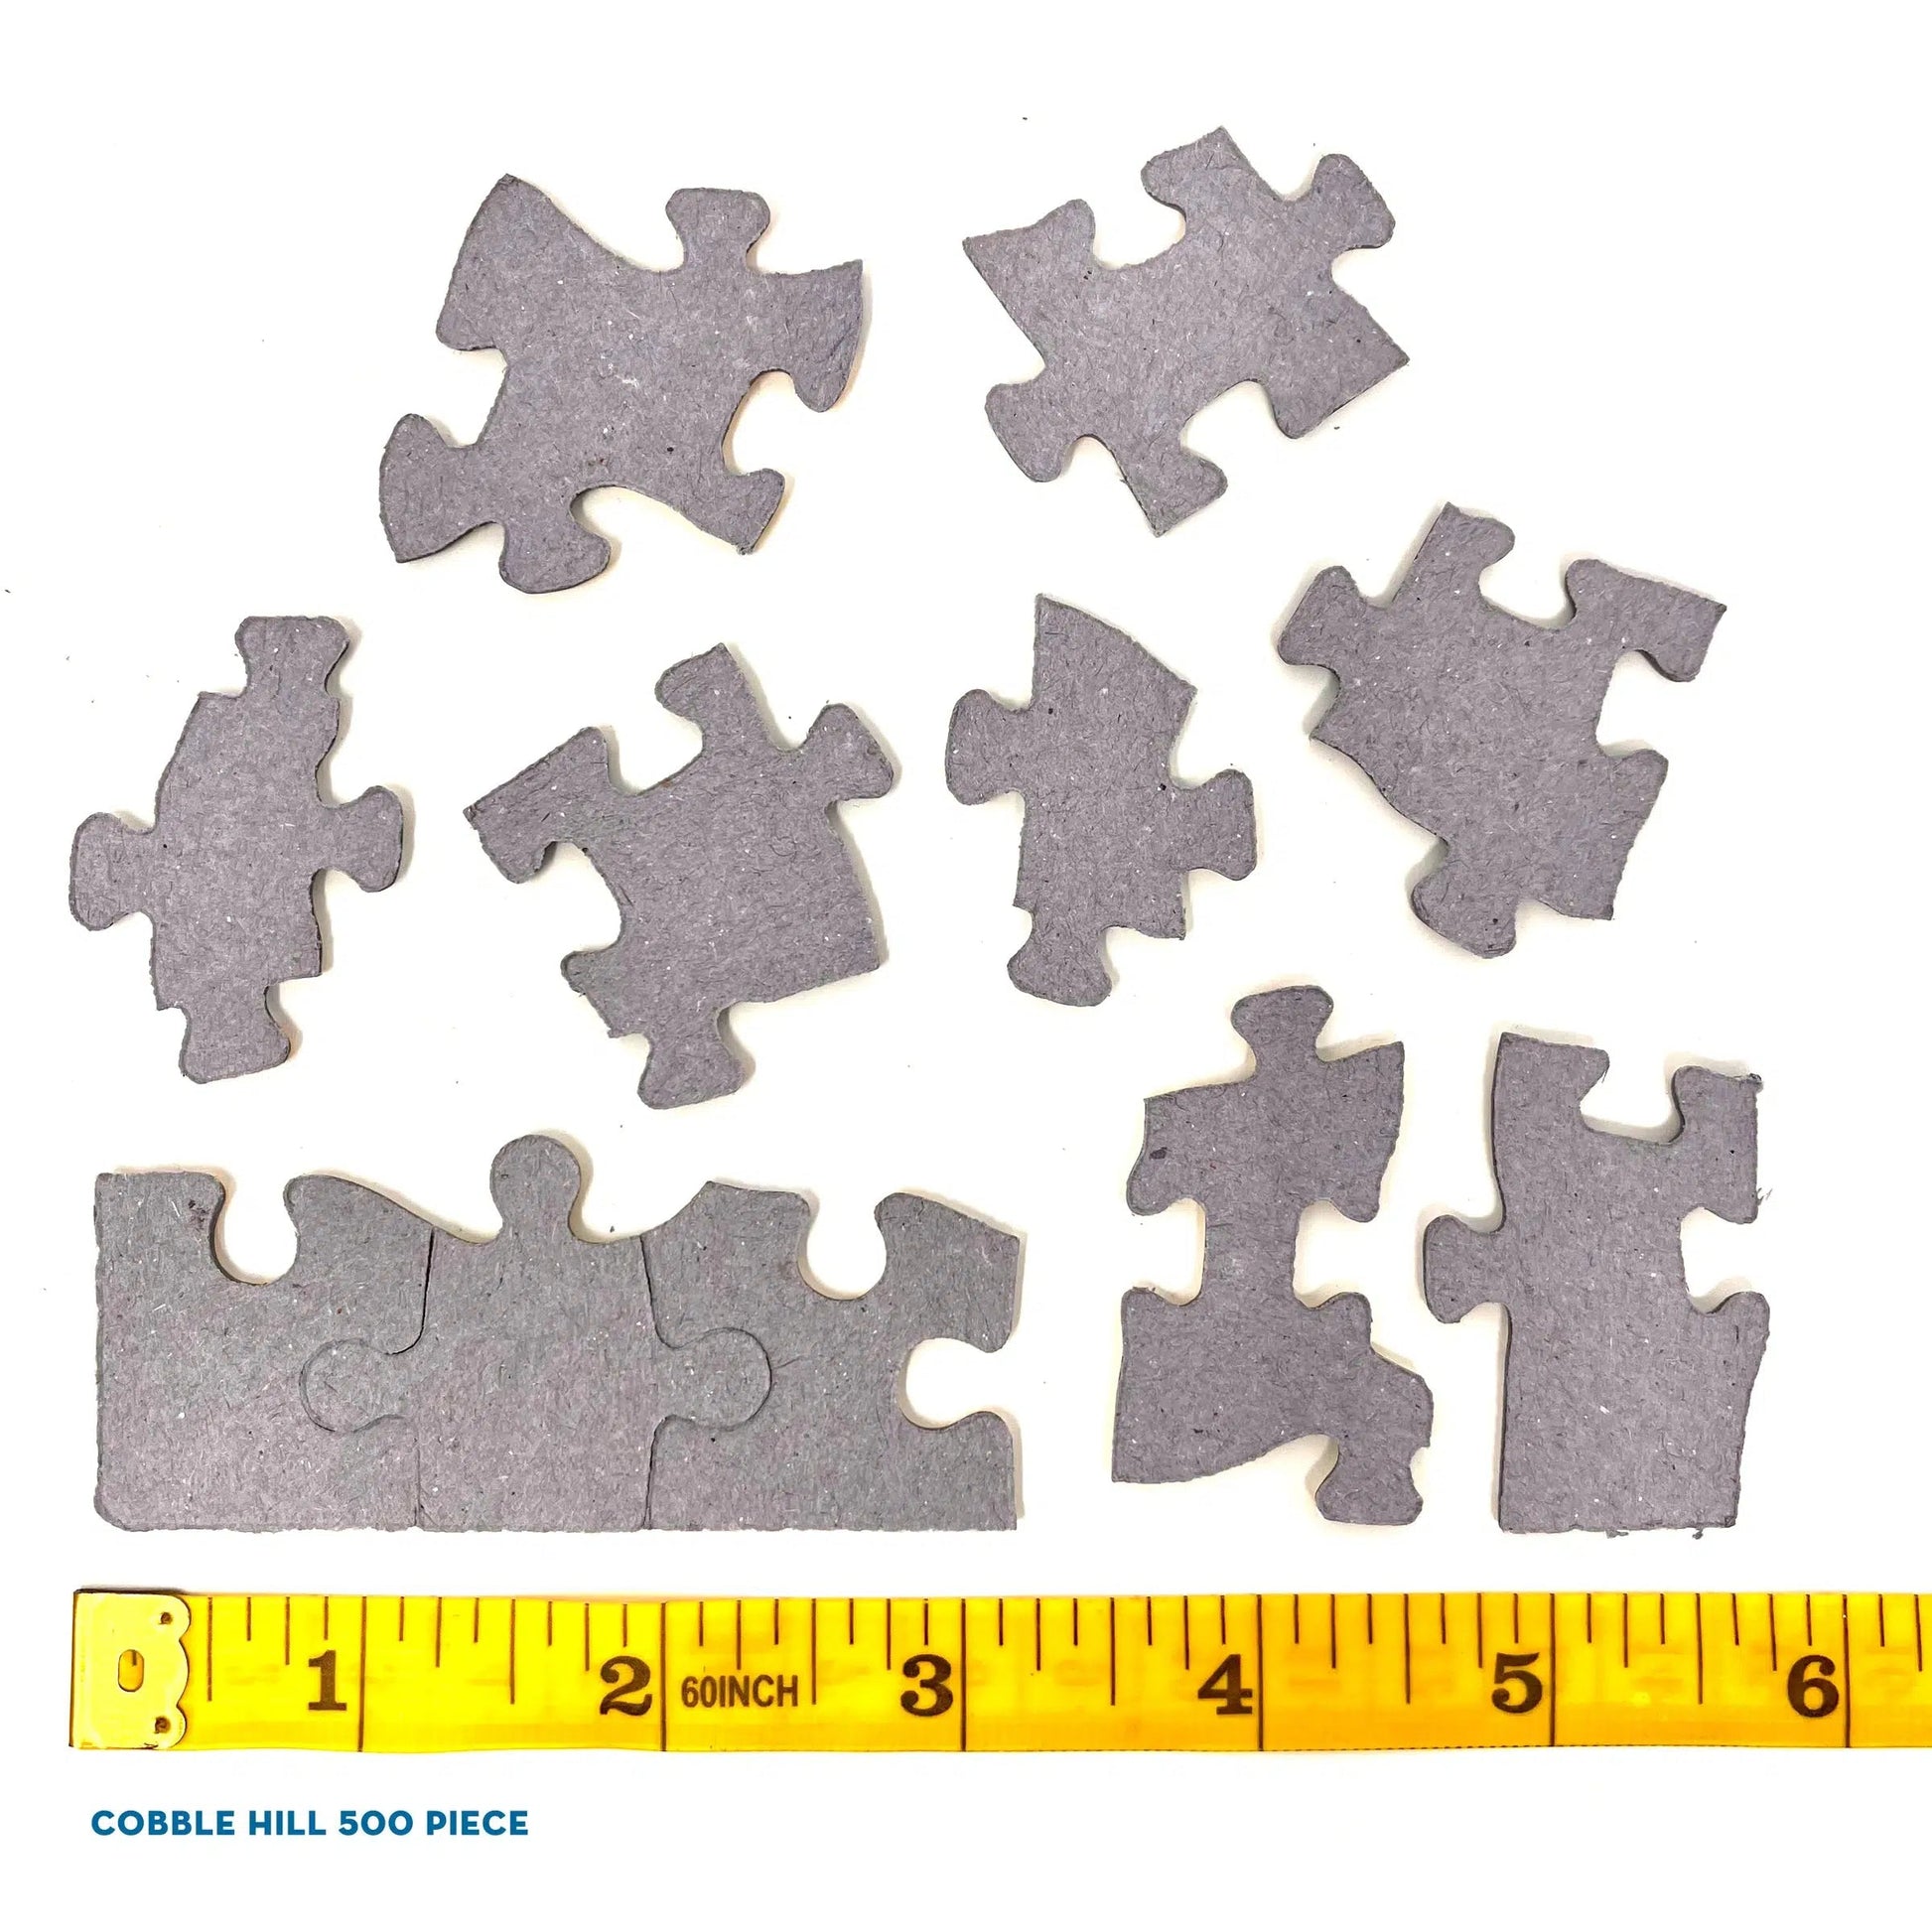 Virgo 500 Piece Jigsaw Puzzle Cobble Hill